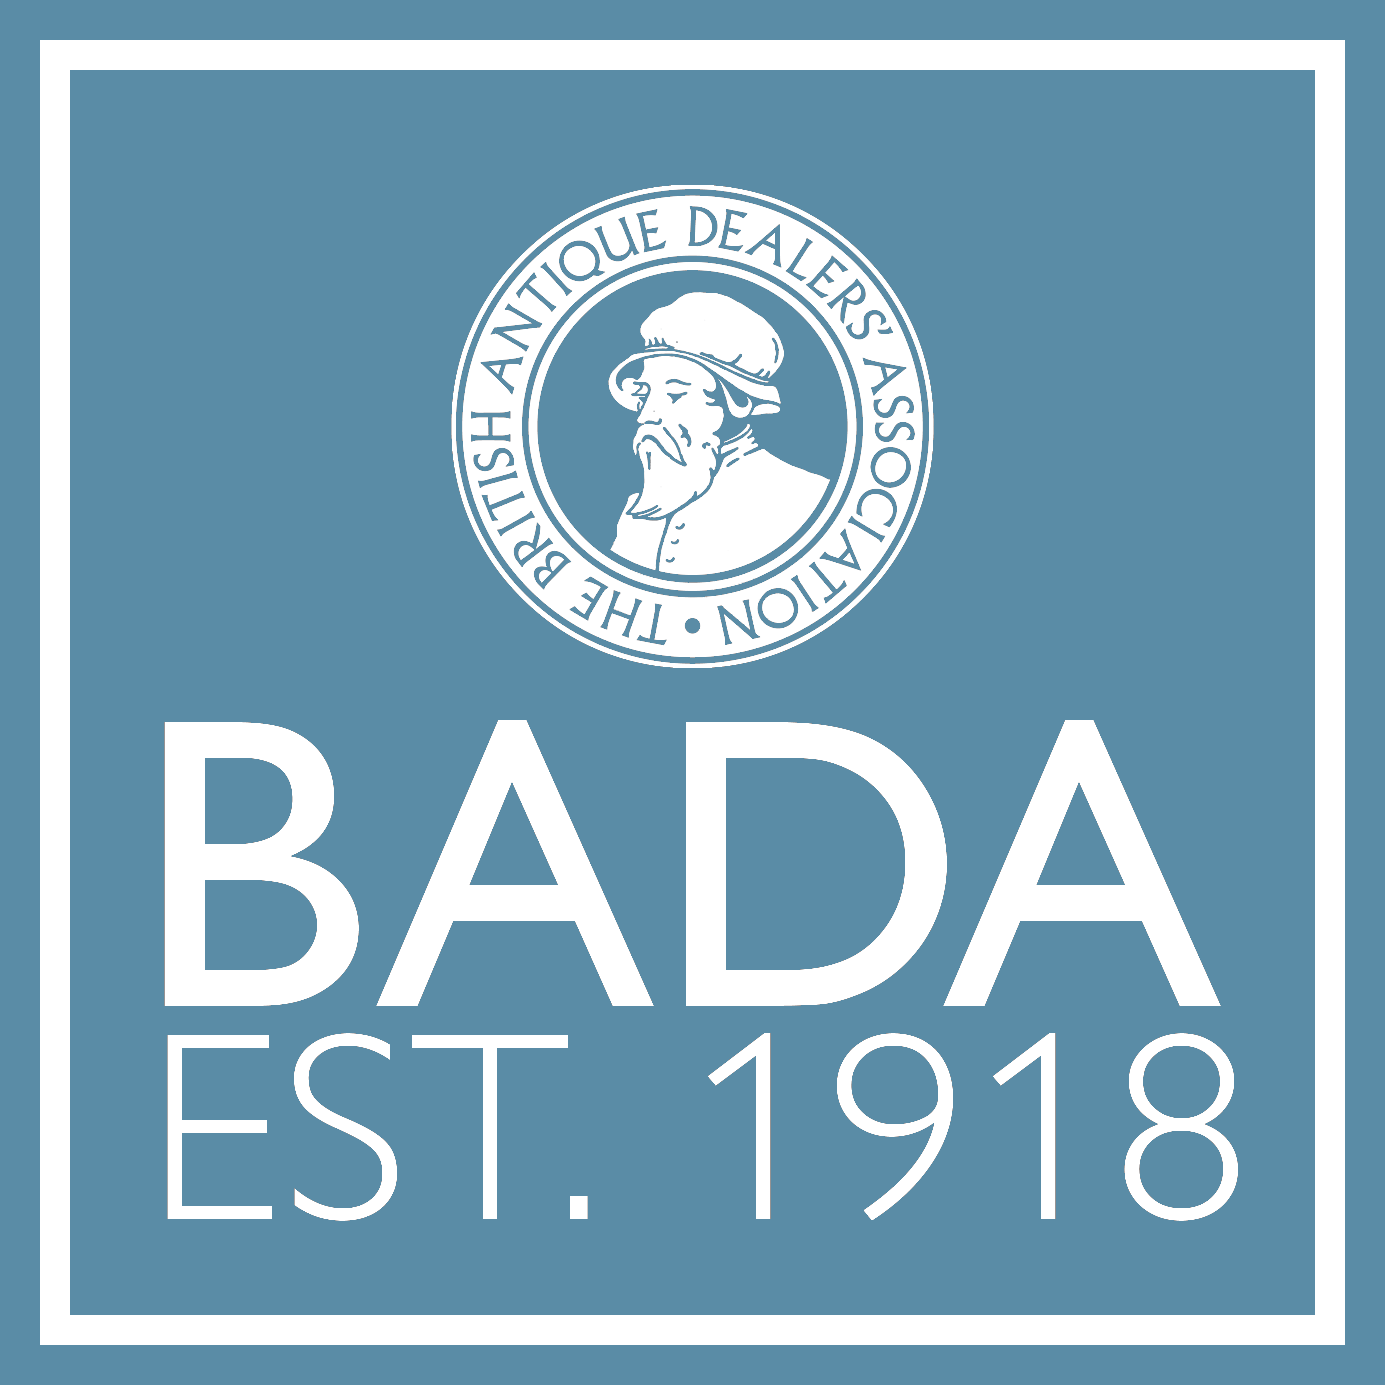 BADA - British Antiques Dealer's Association